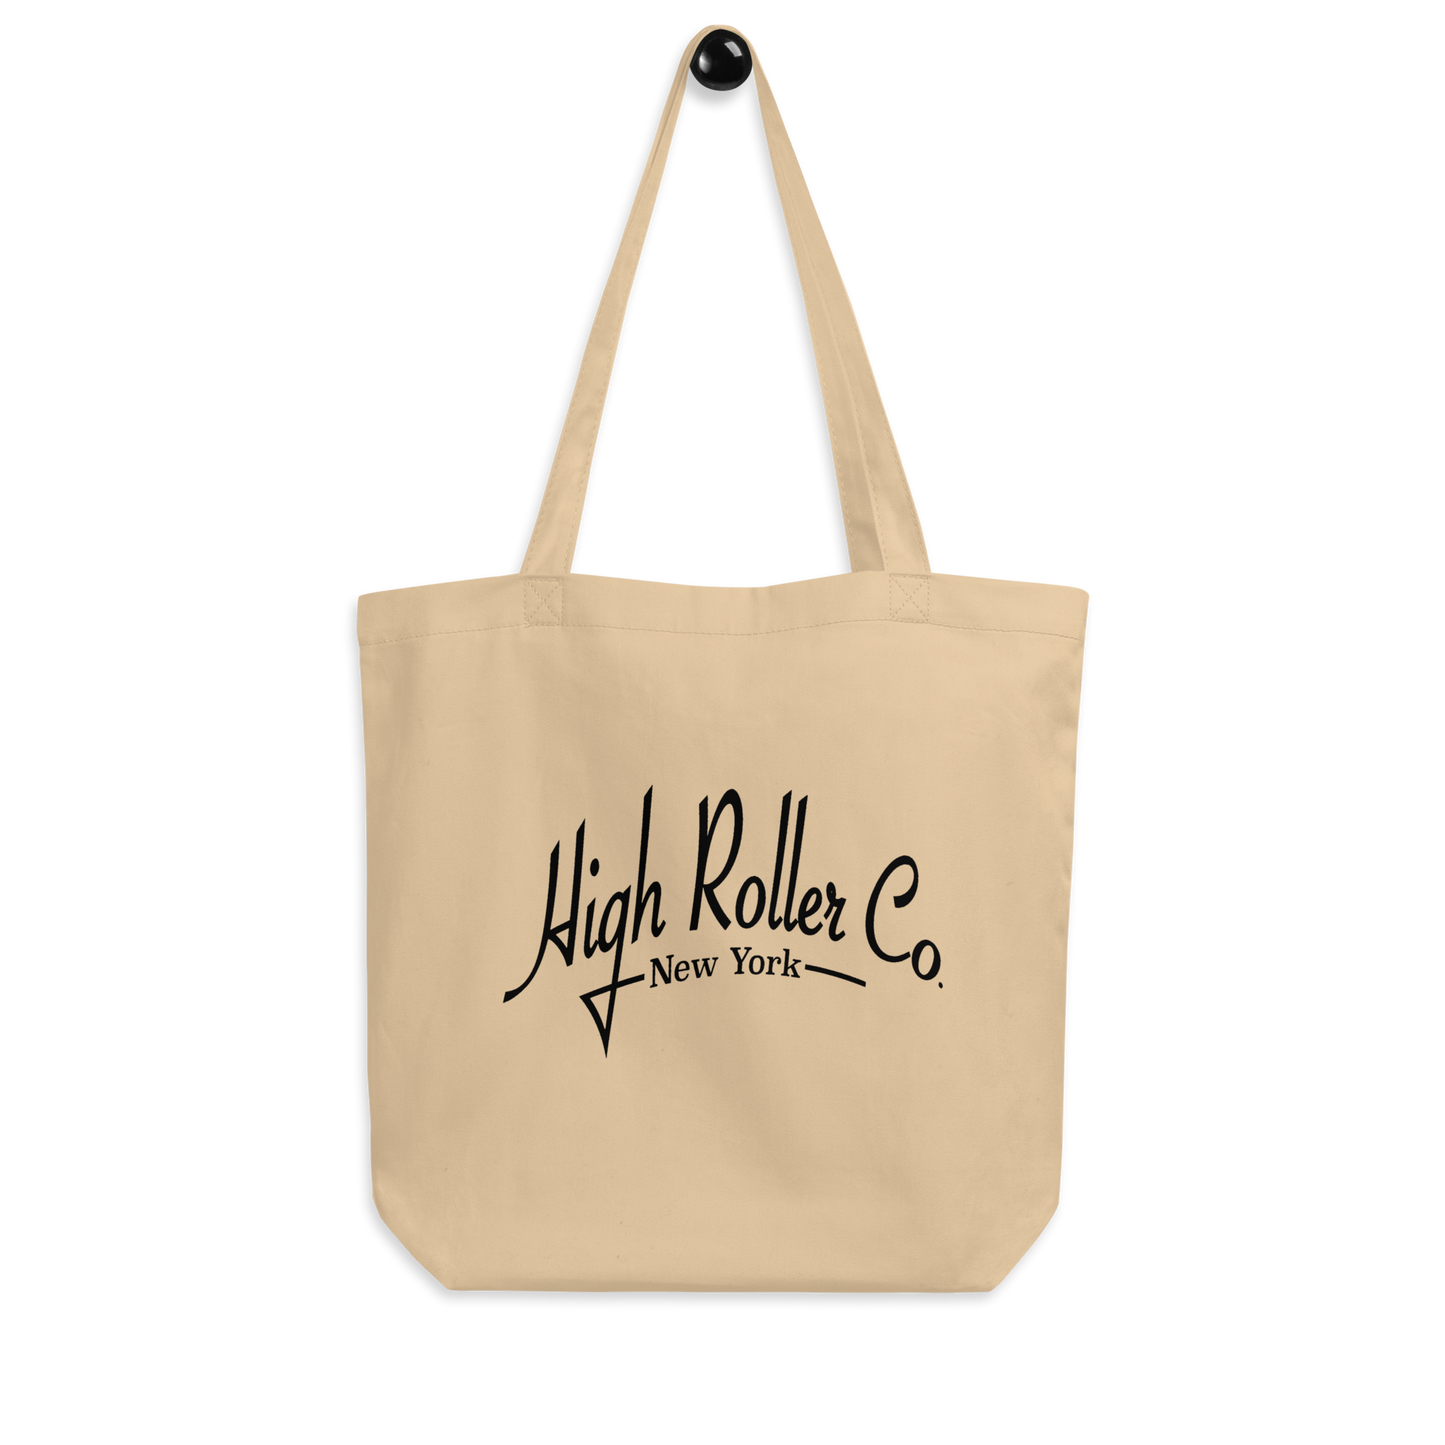 High Roller Co. Tote Bag